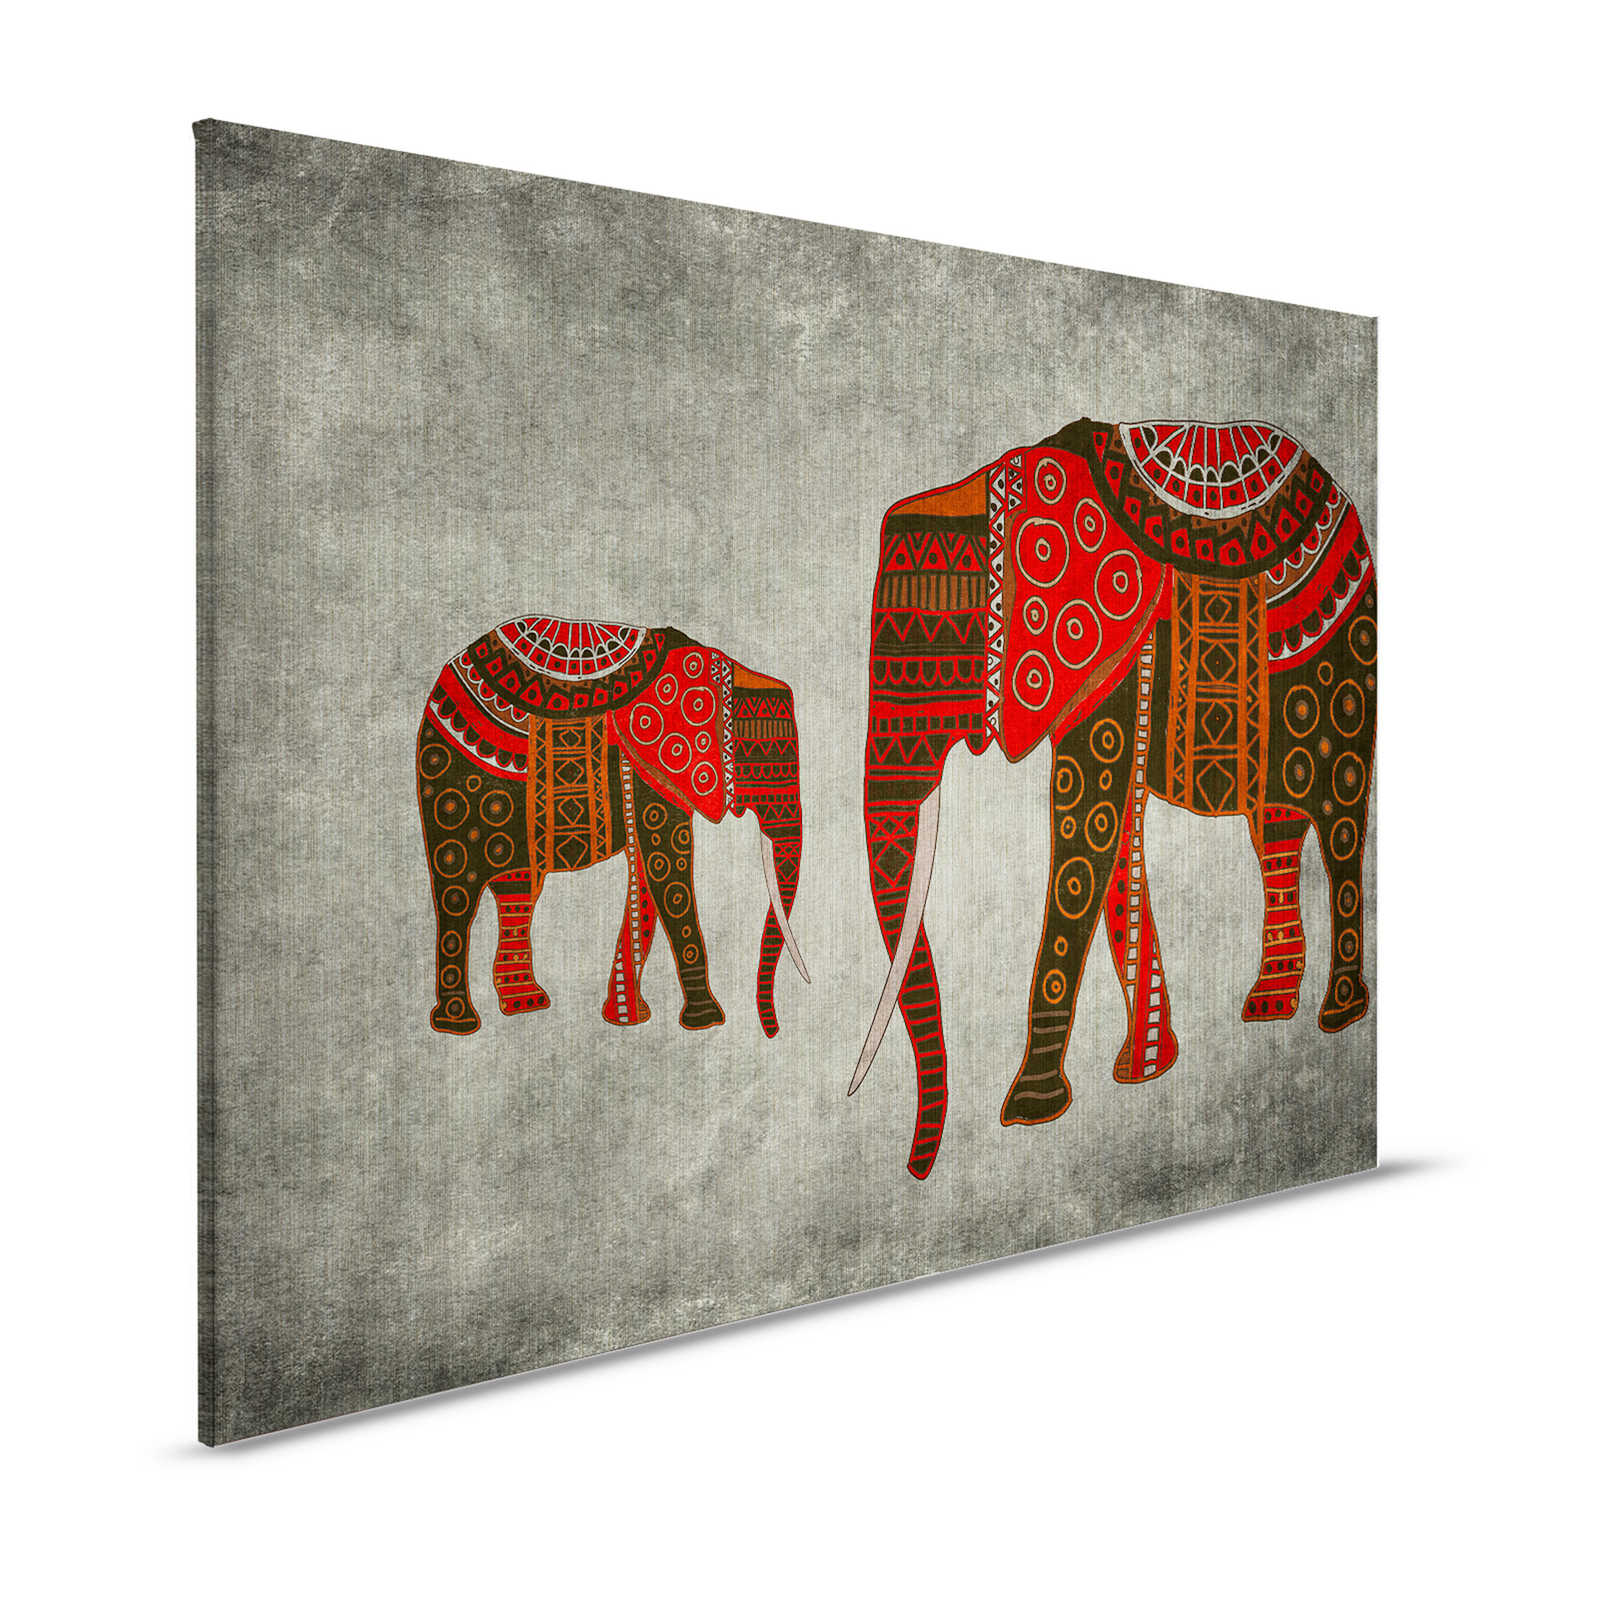 Nairobi 4 - Elephants canvas painting with ethnic patterns - 1.20 m x 0.80 m
